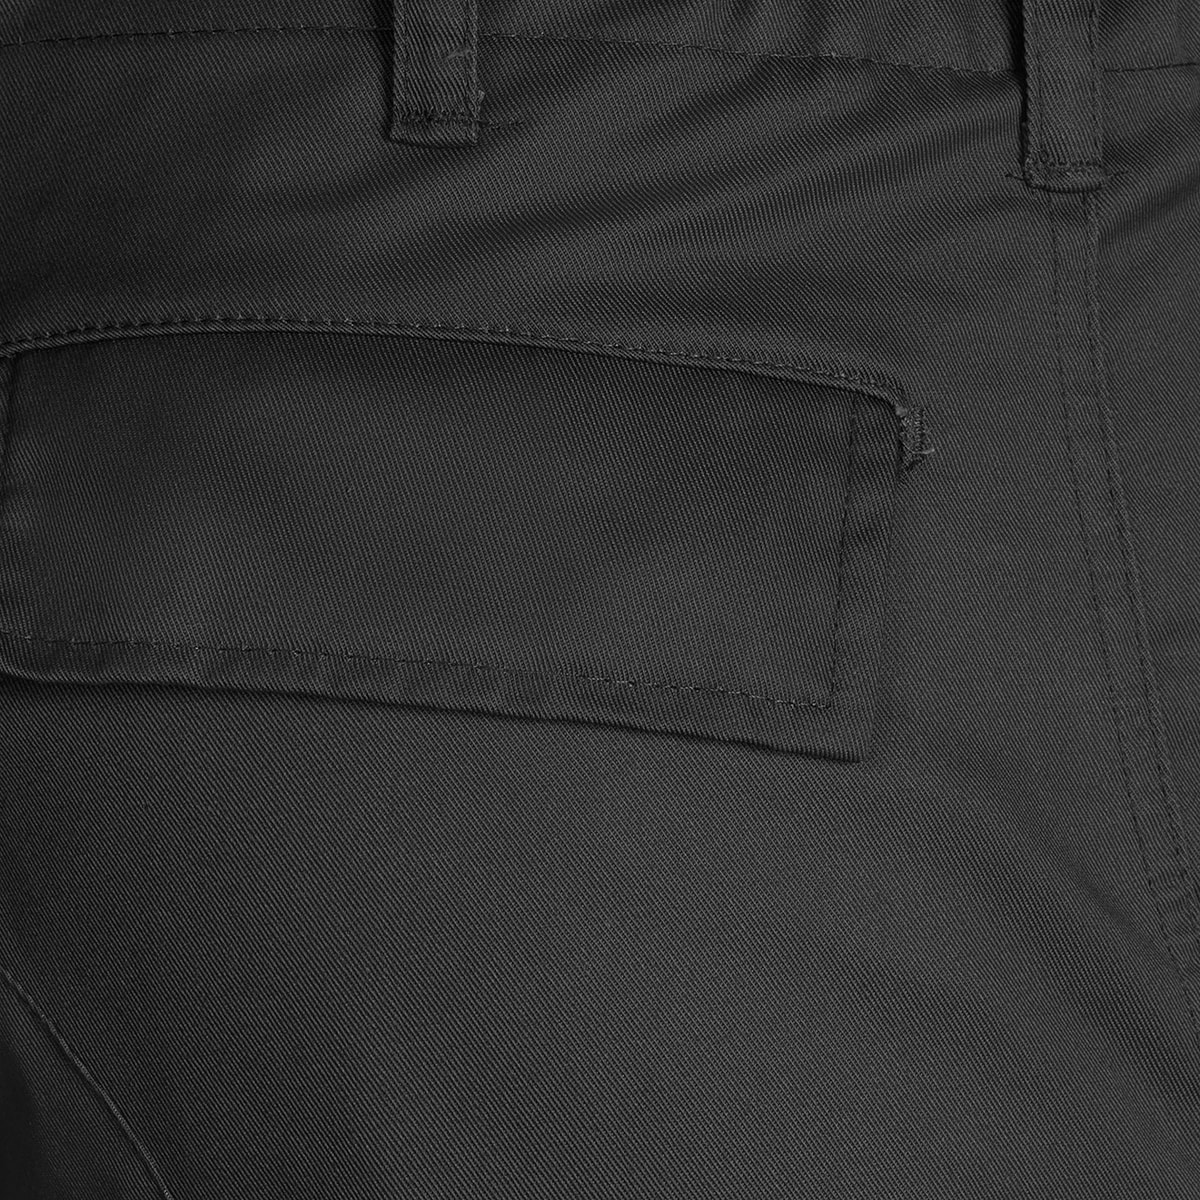 Spodnie trekkingowe 2w1 Mil-Tec BDU Zip-Off - Black